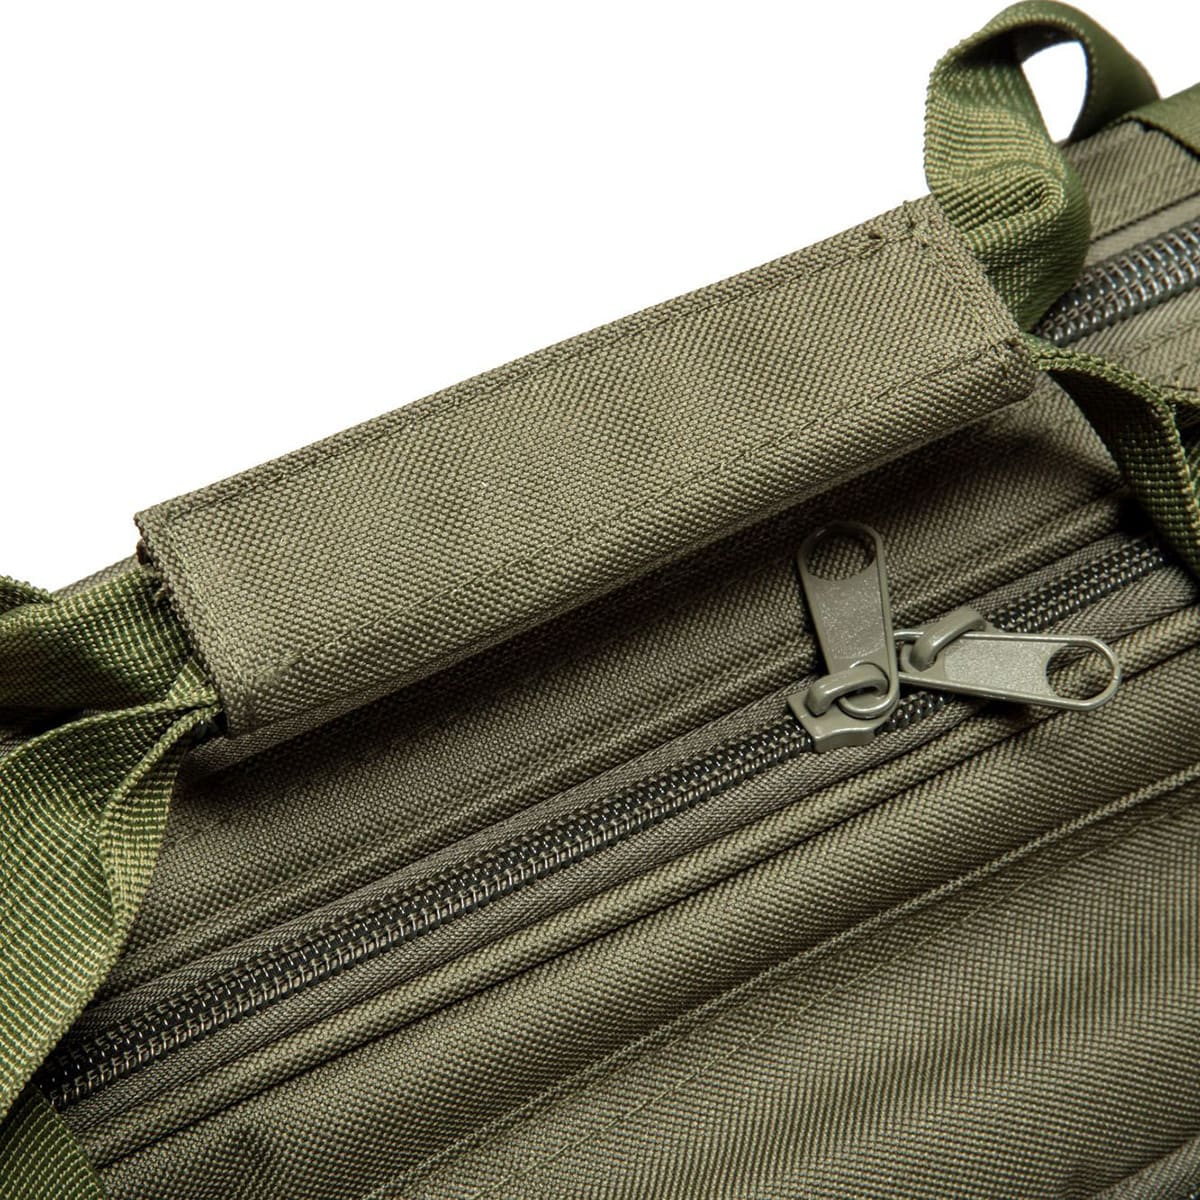 Pokrowiec na replikę ASG Specna Arms Gun Bag V2 - Olive